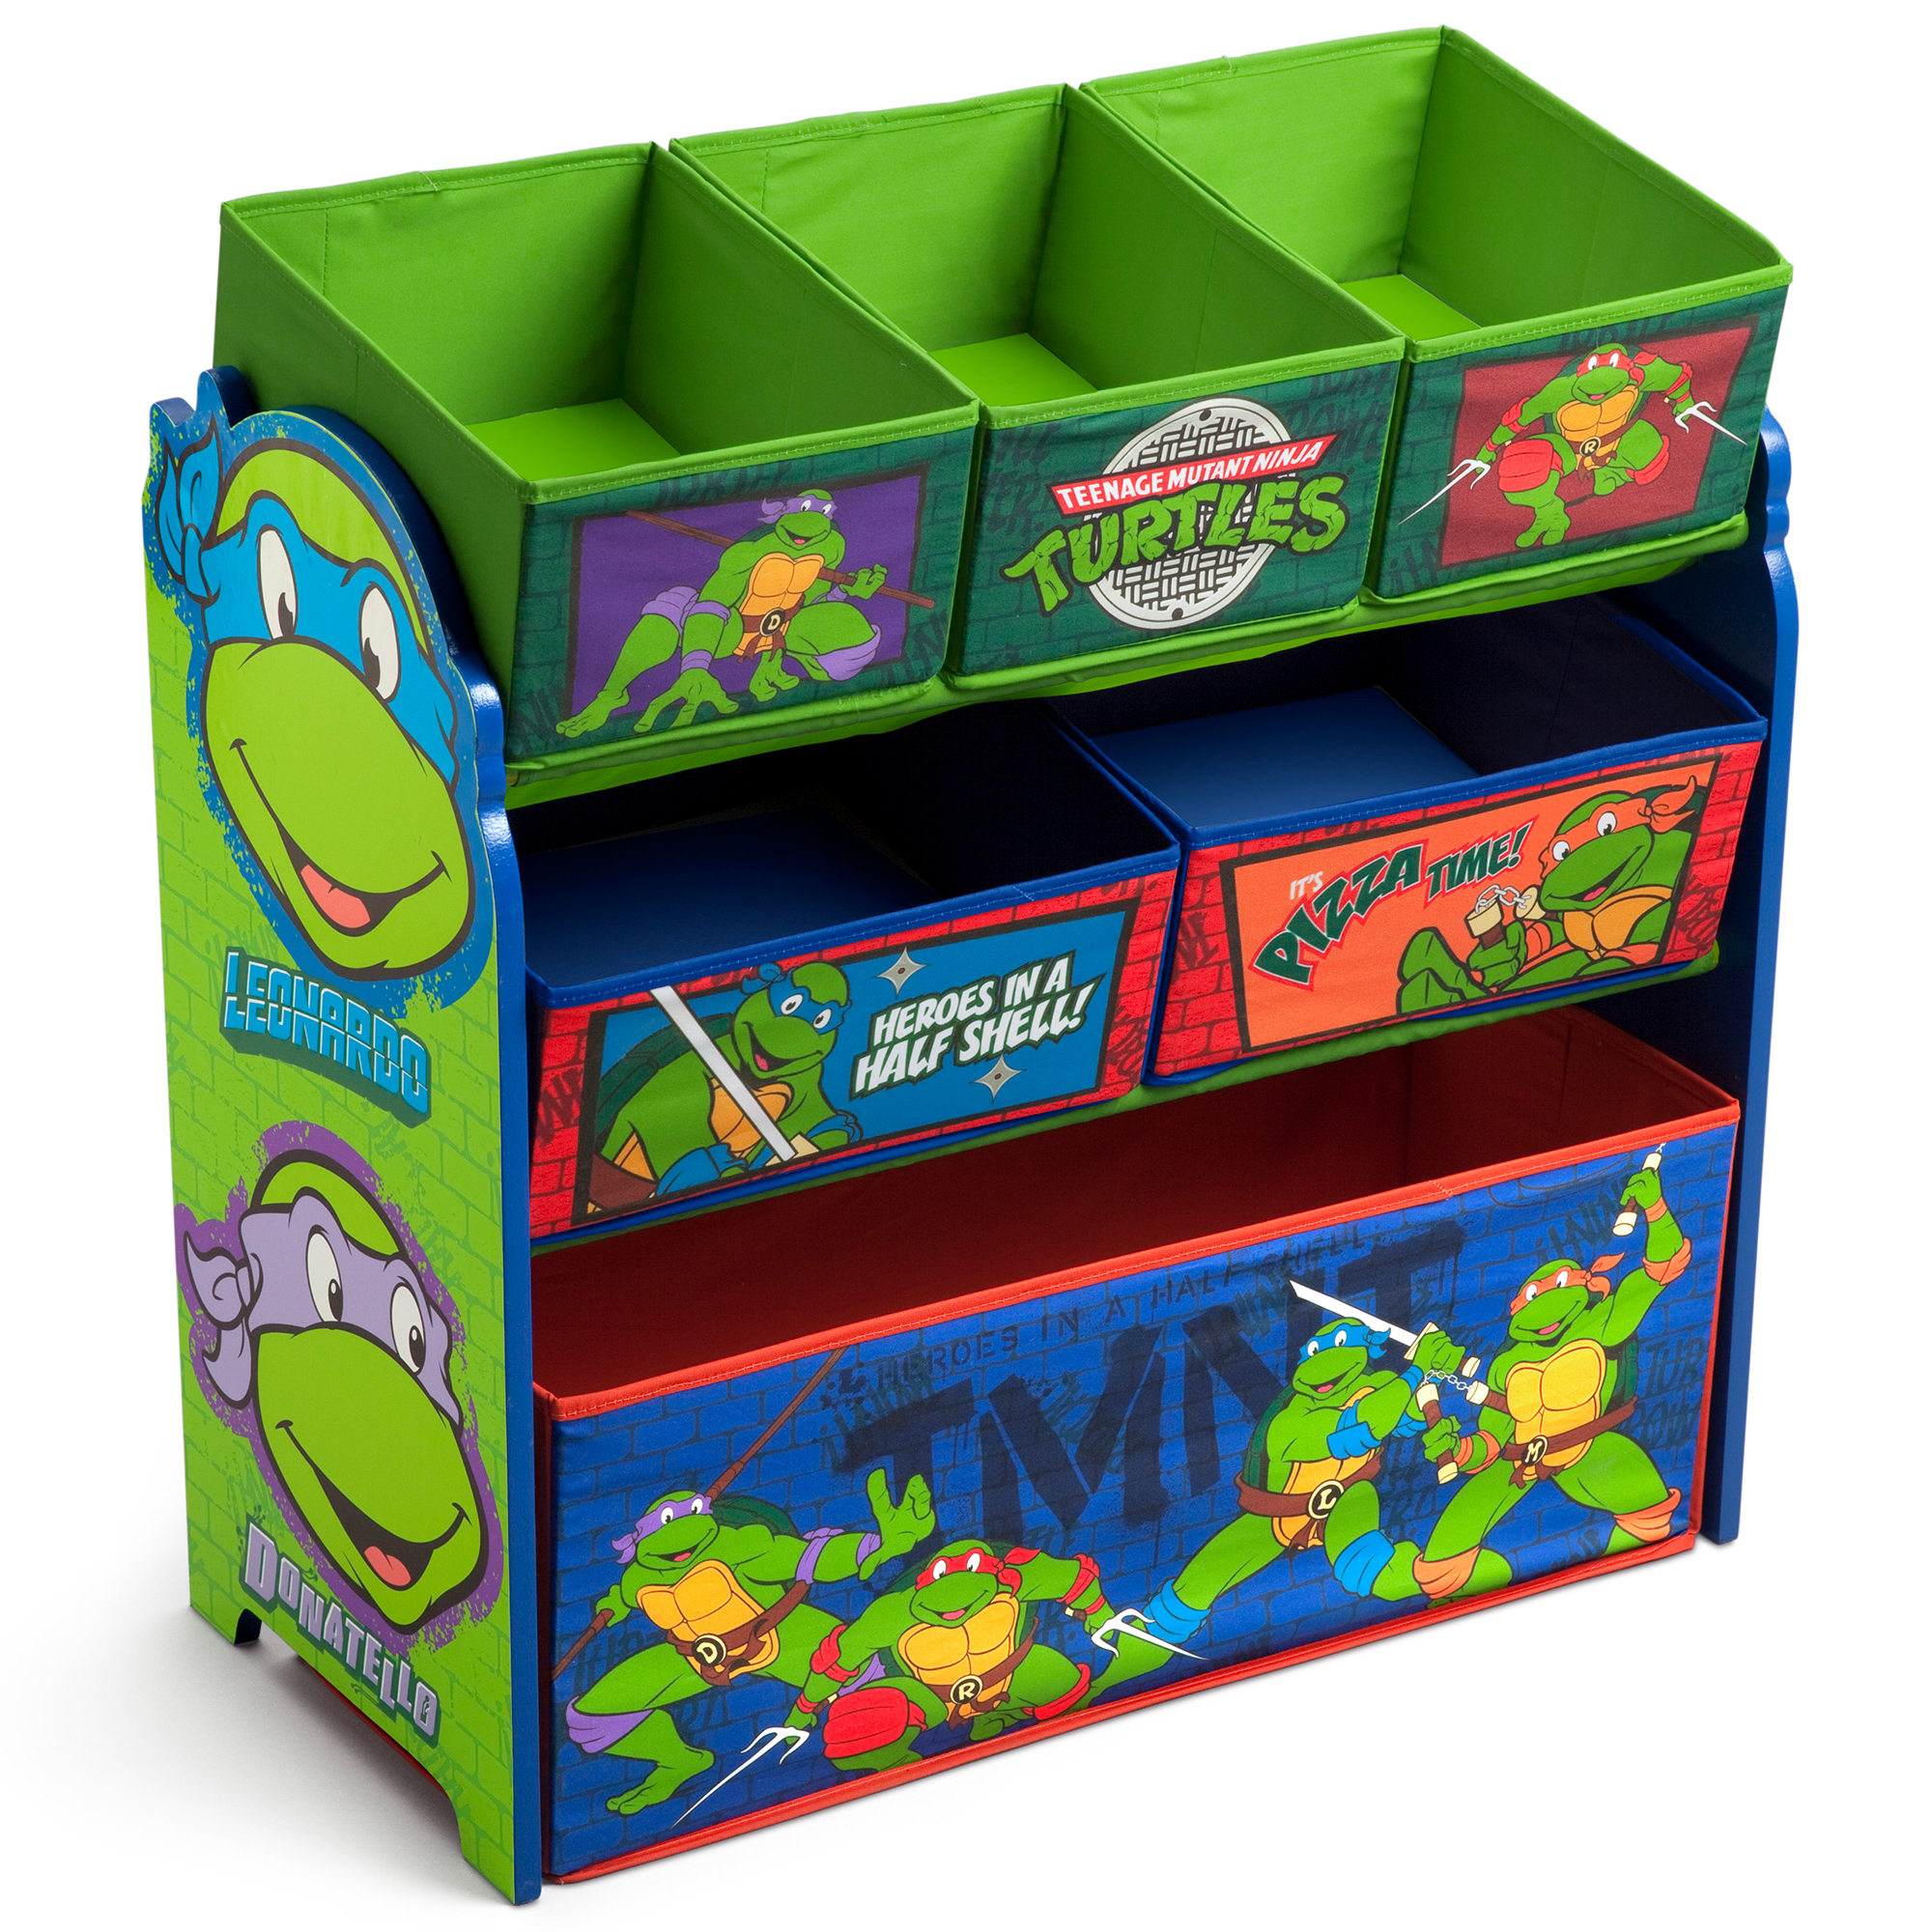 Teenage Mutant Ninja Turtles Multi-Bin Toy Organizer by Delta Children - image 1 of 7